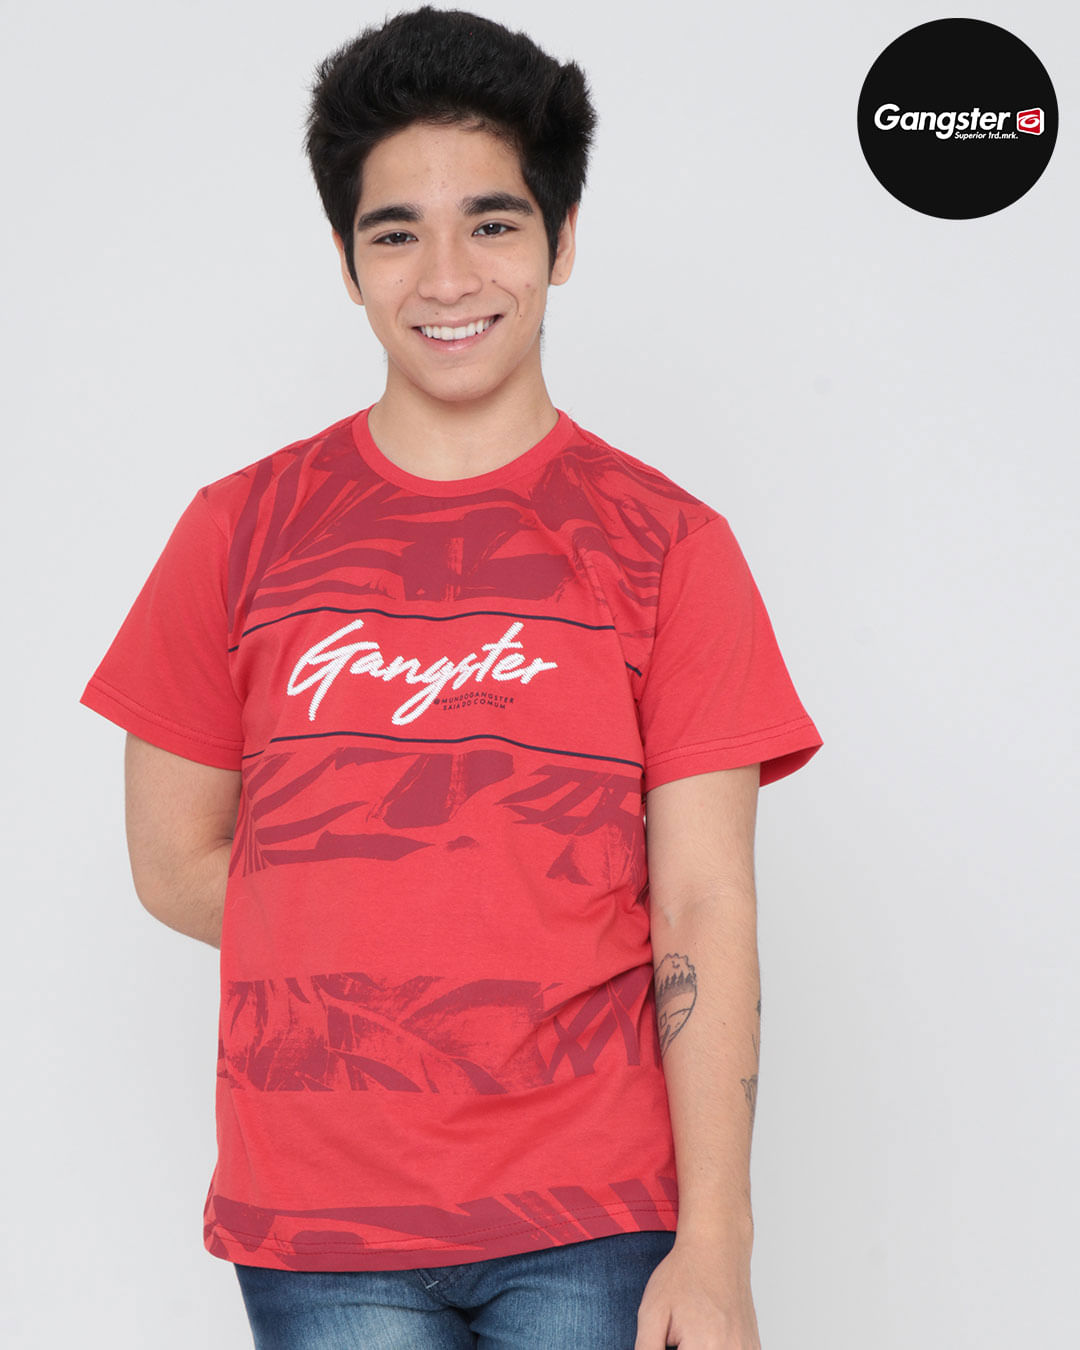 Camiseta-30012109-Mc-M1016-Trop---Vermelho-Medio